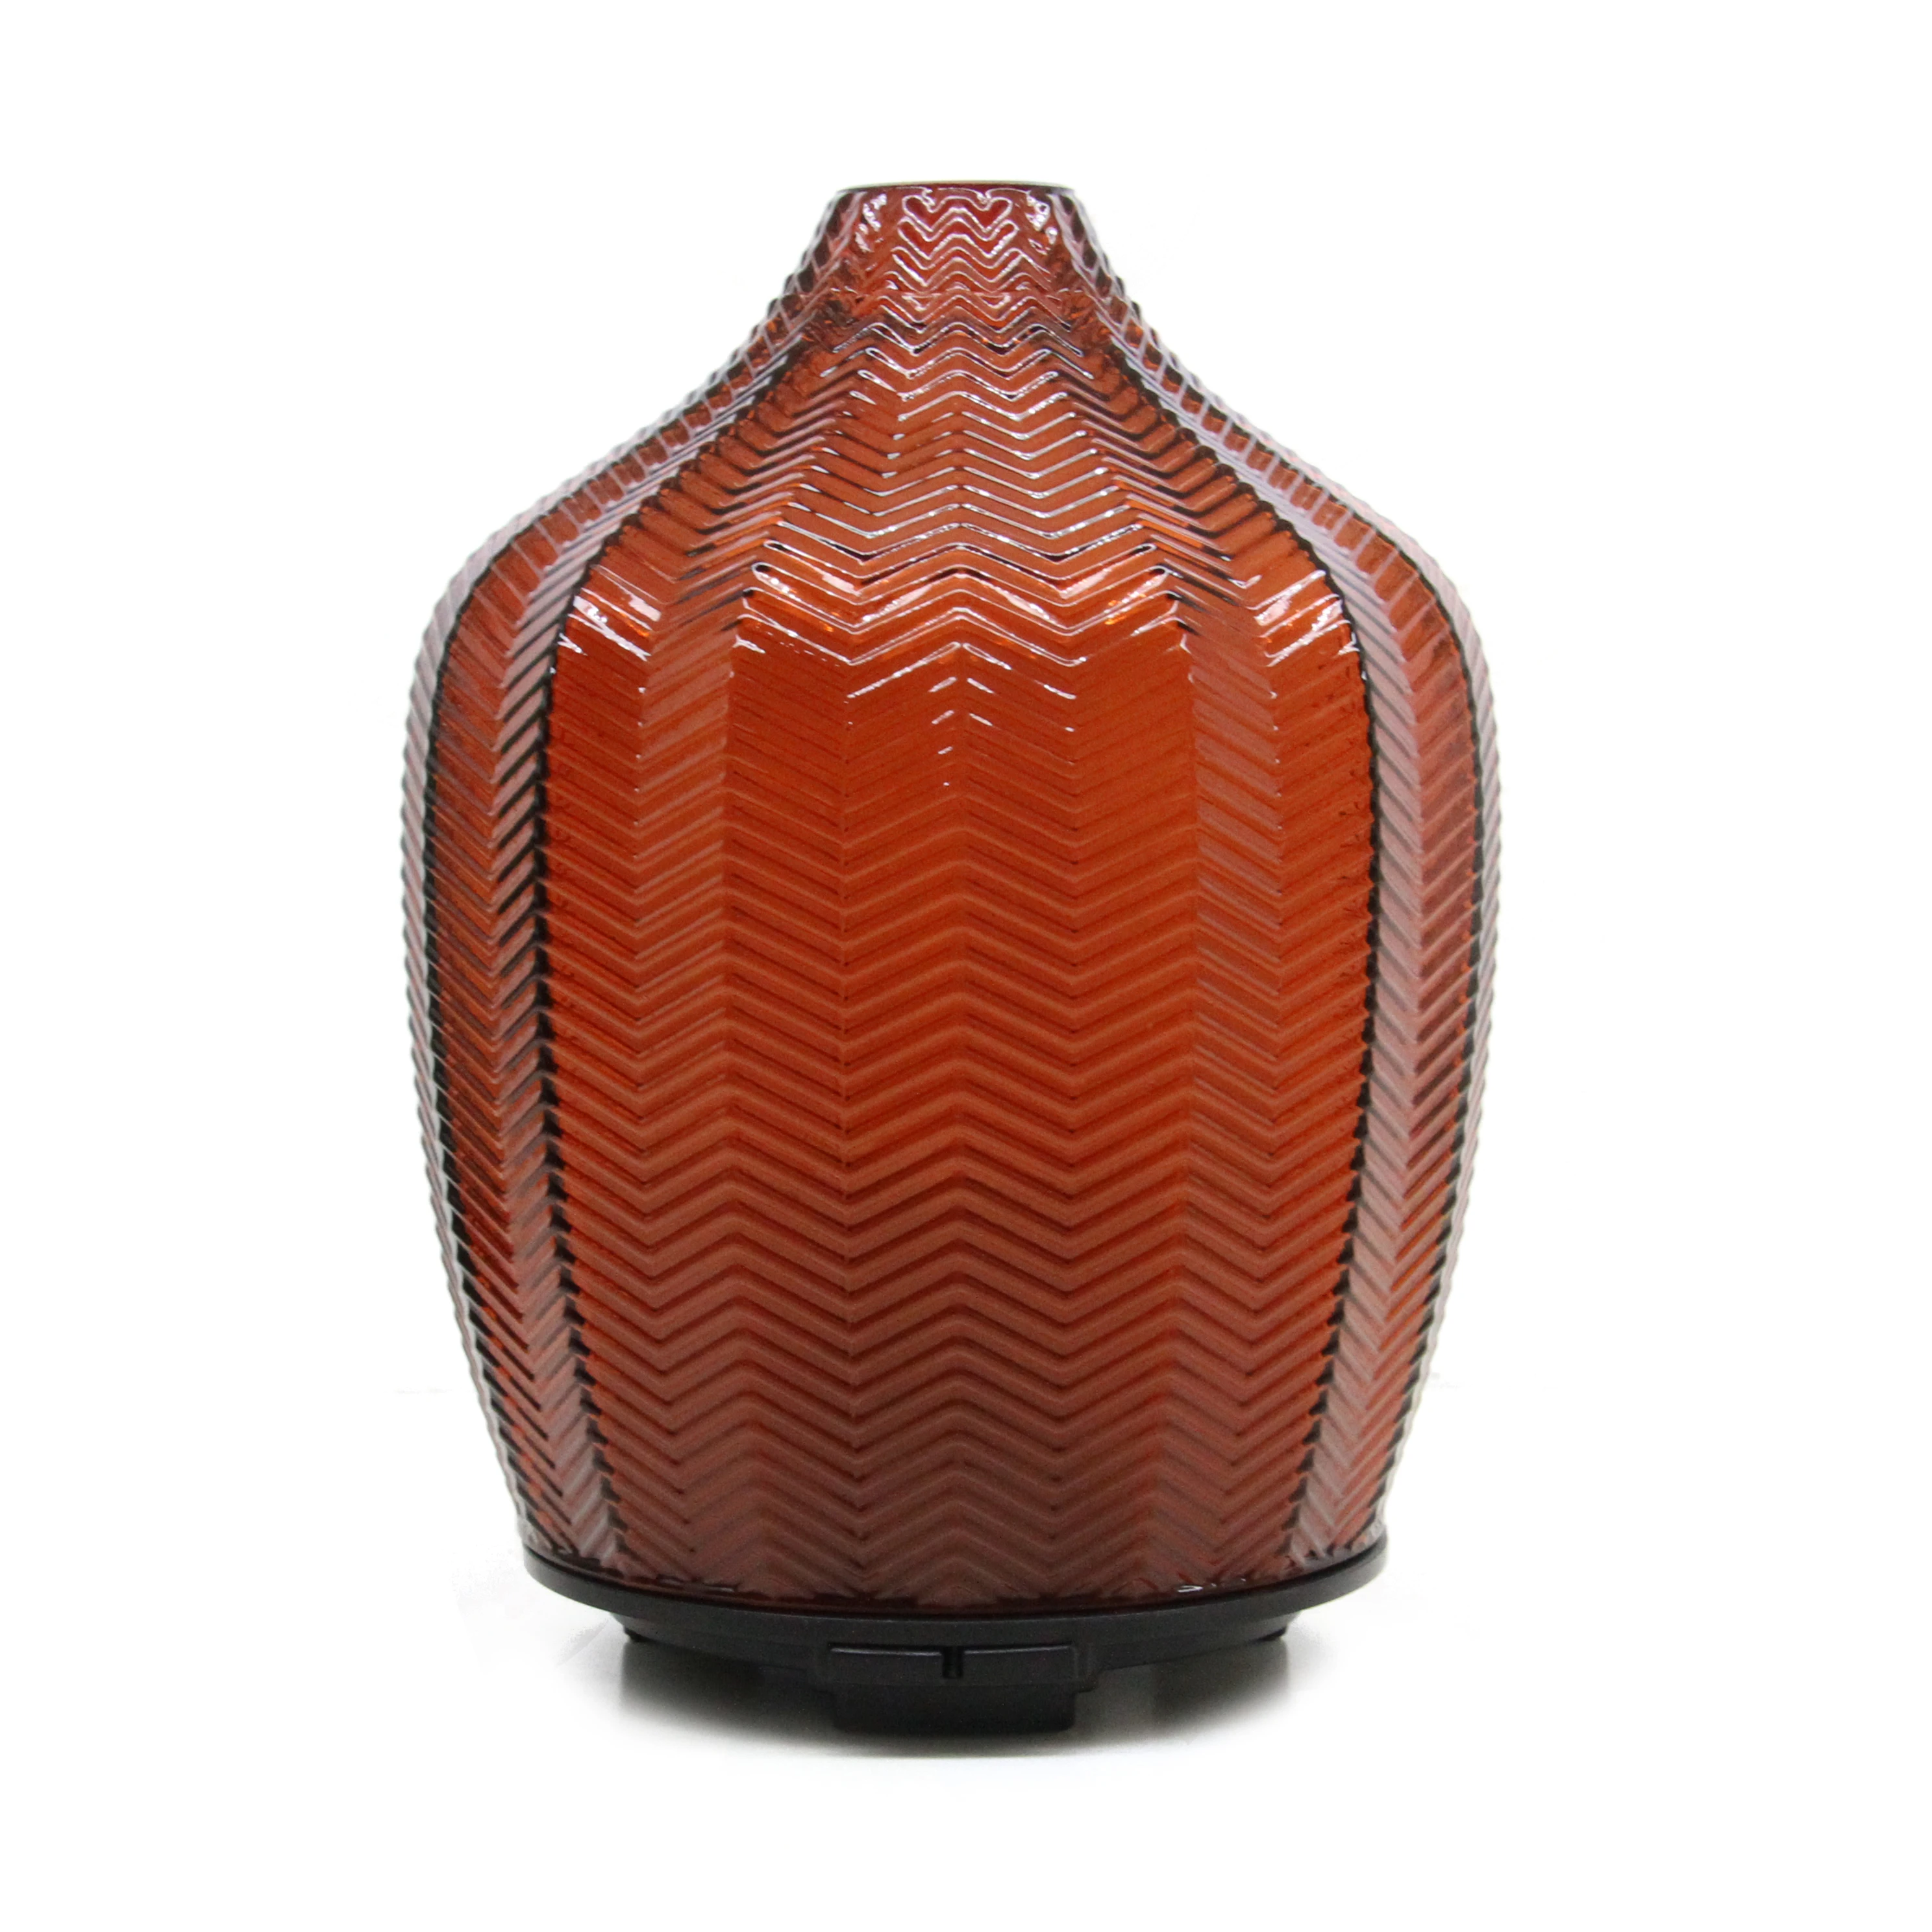 Shahararren Art Glass Air Aroma Diffuser Essential Oil Ultrasonic Humidifier